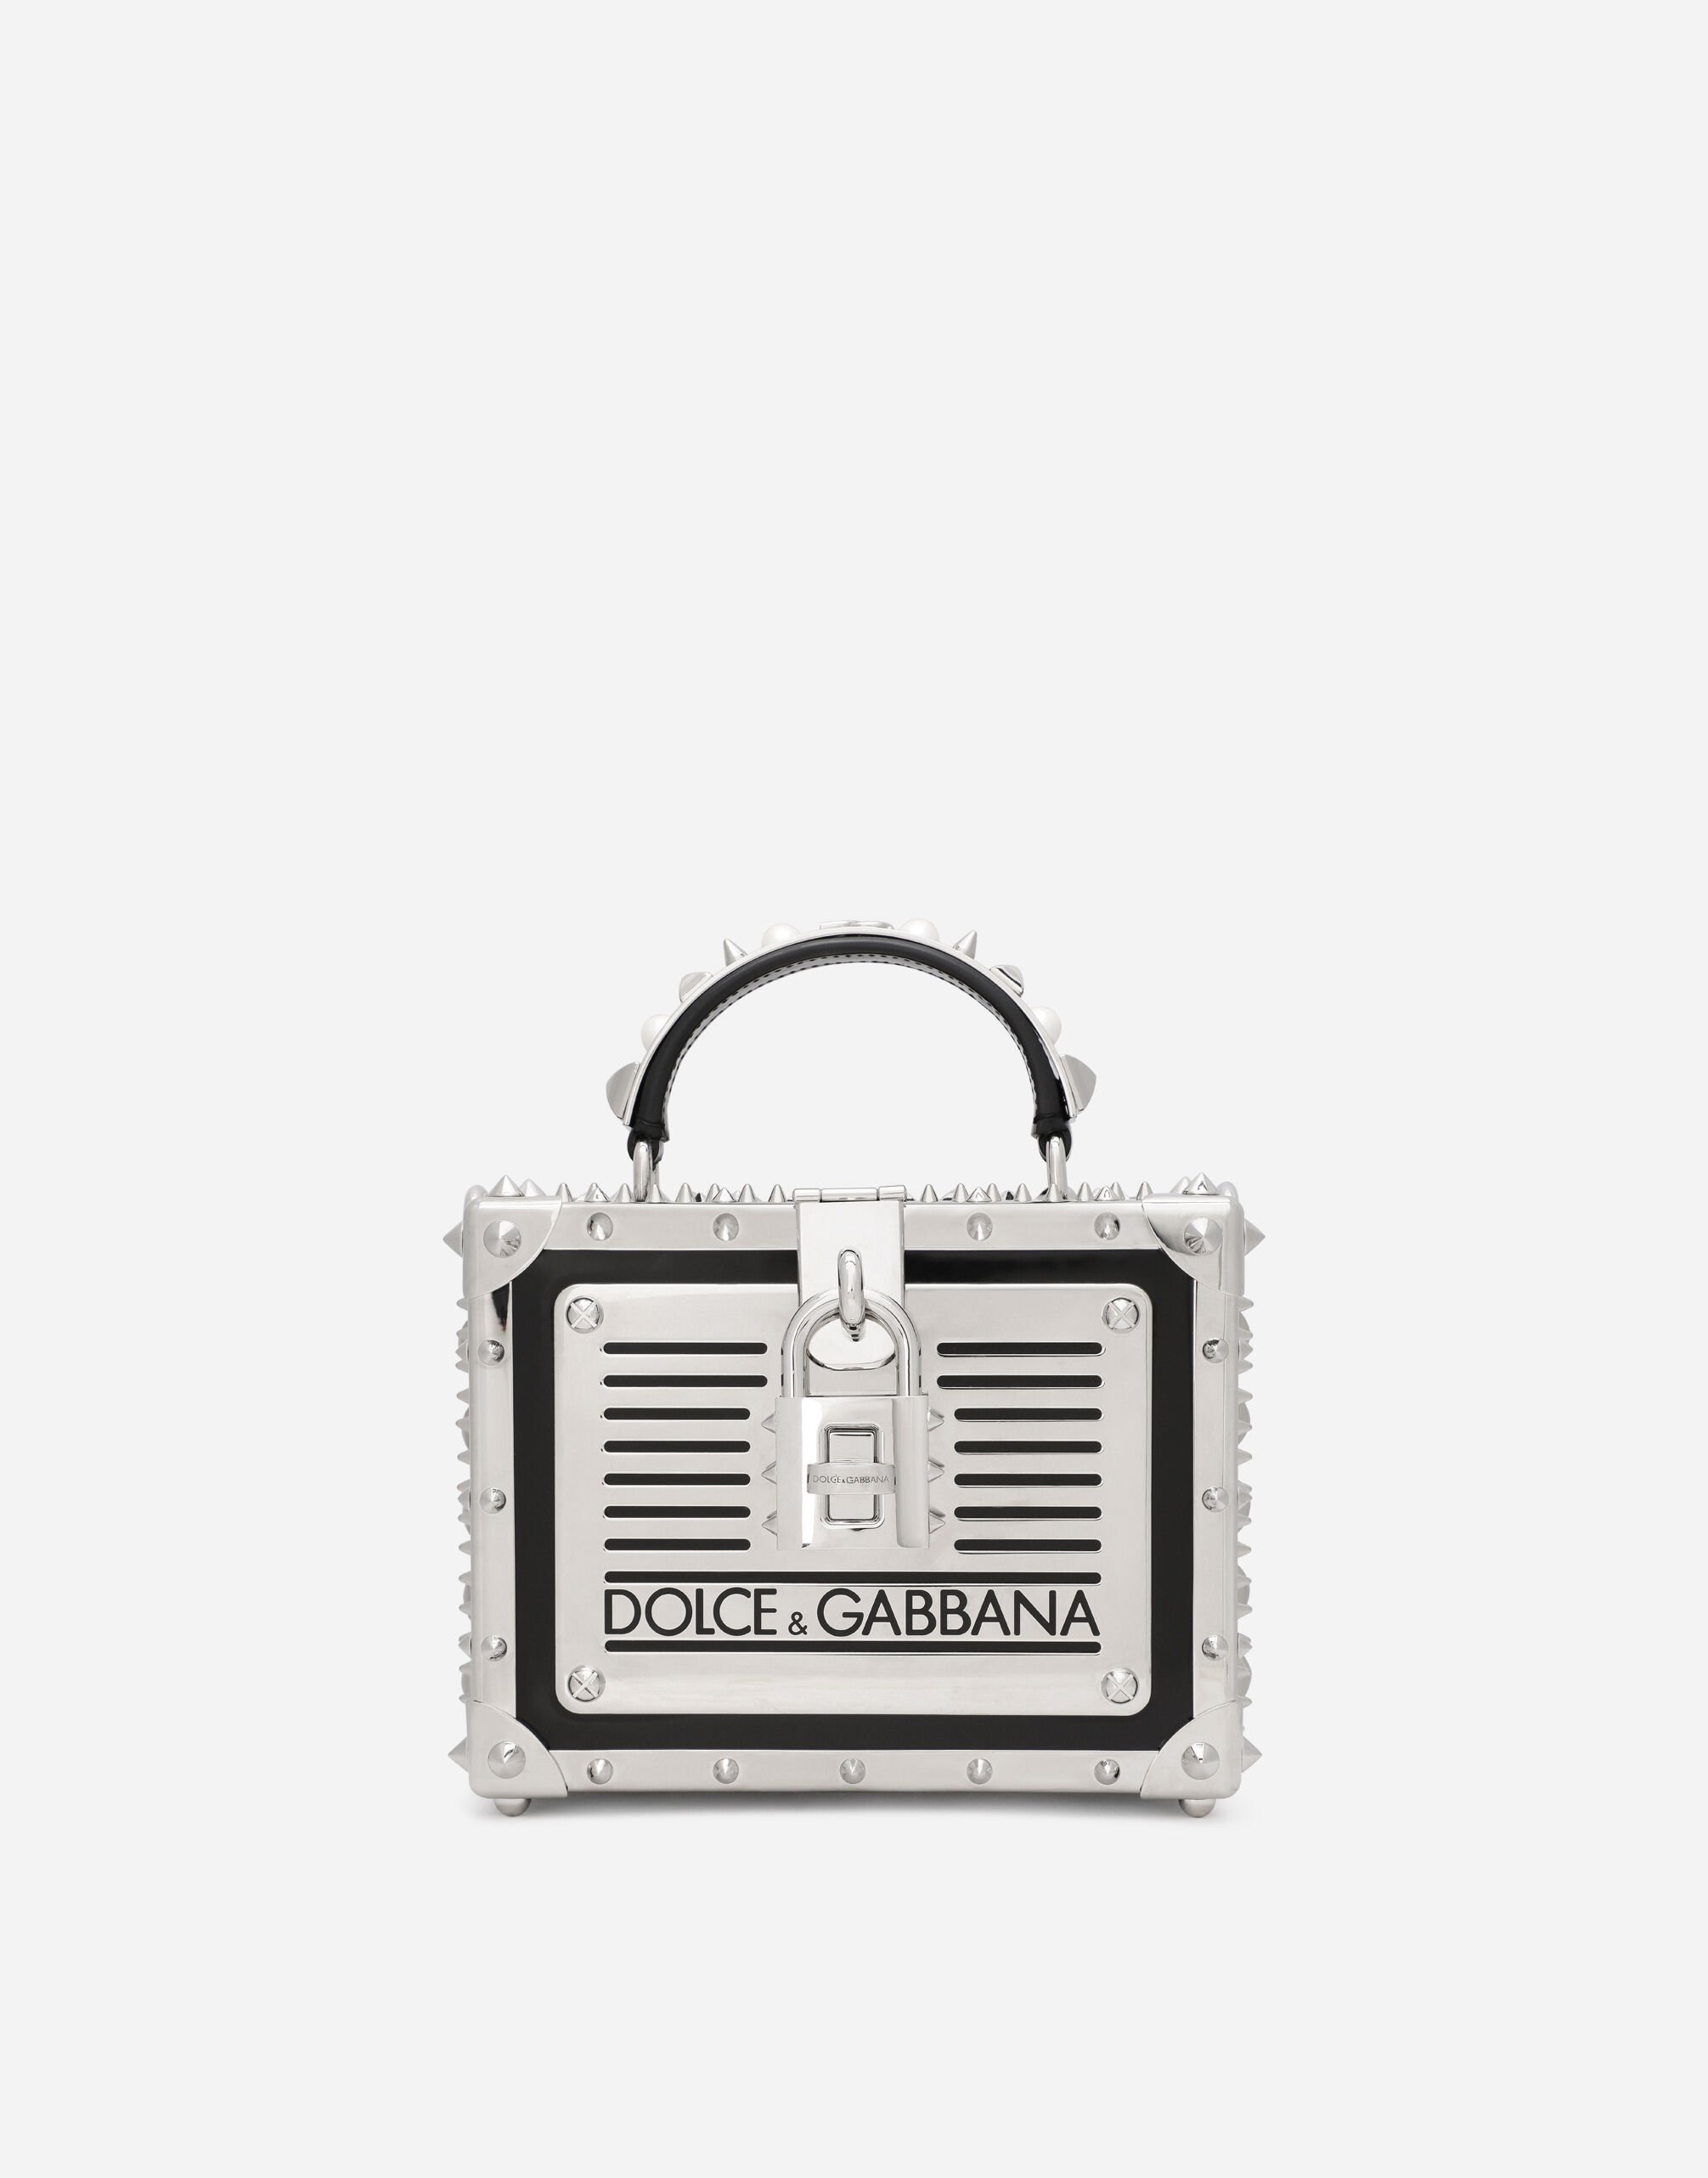 Dolce & Gabbana Polished calfskin Dolce Box bag with studs Print BB5970AT878